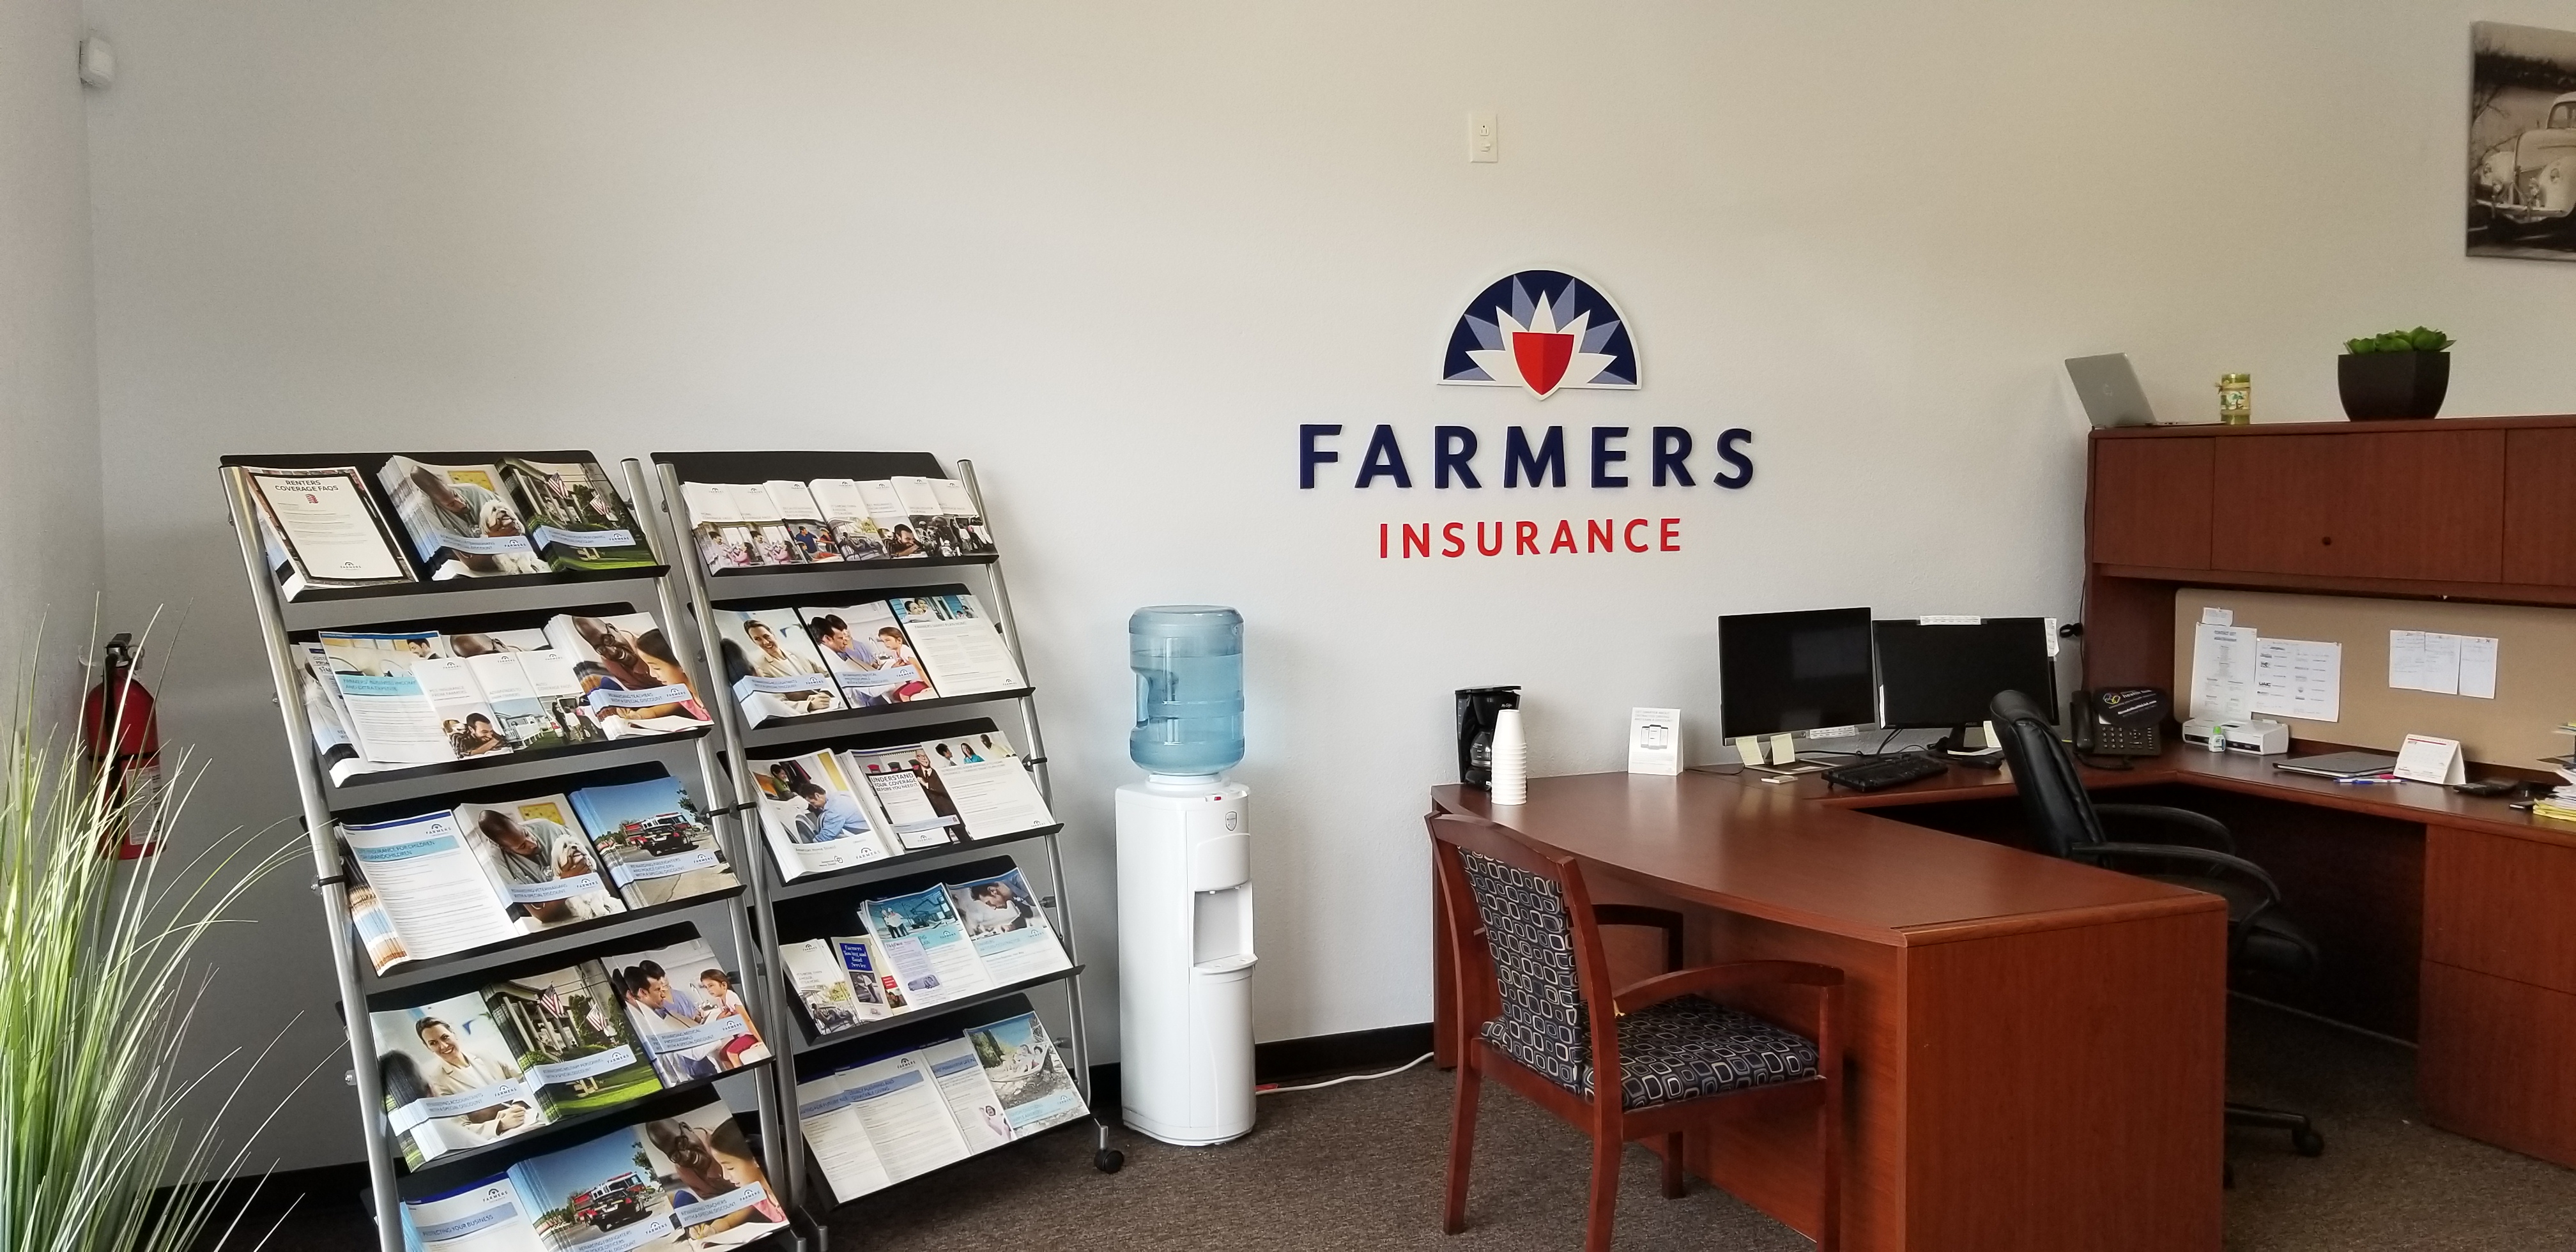 Nevada Insurance Enrollment - office